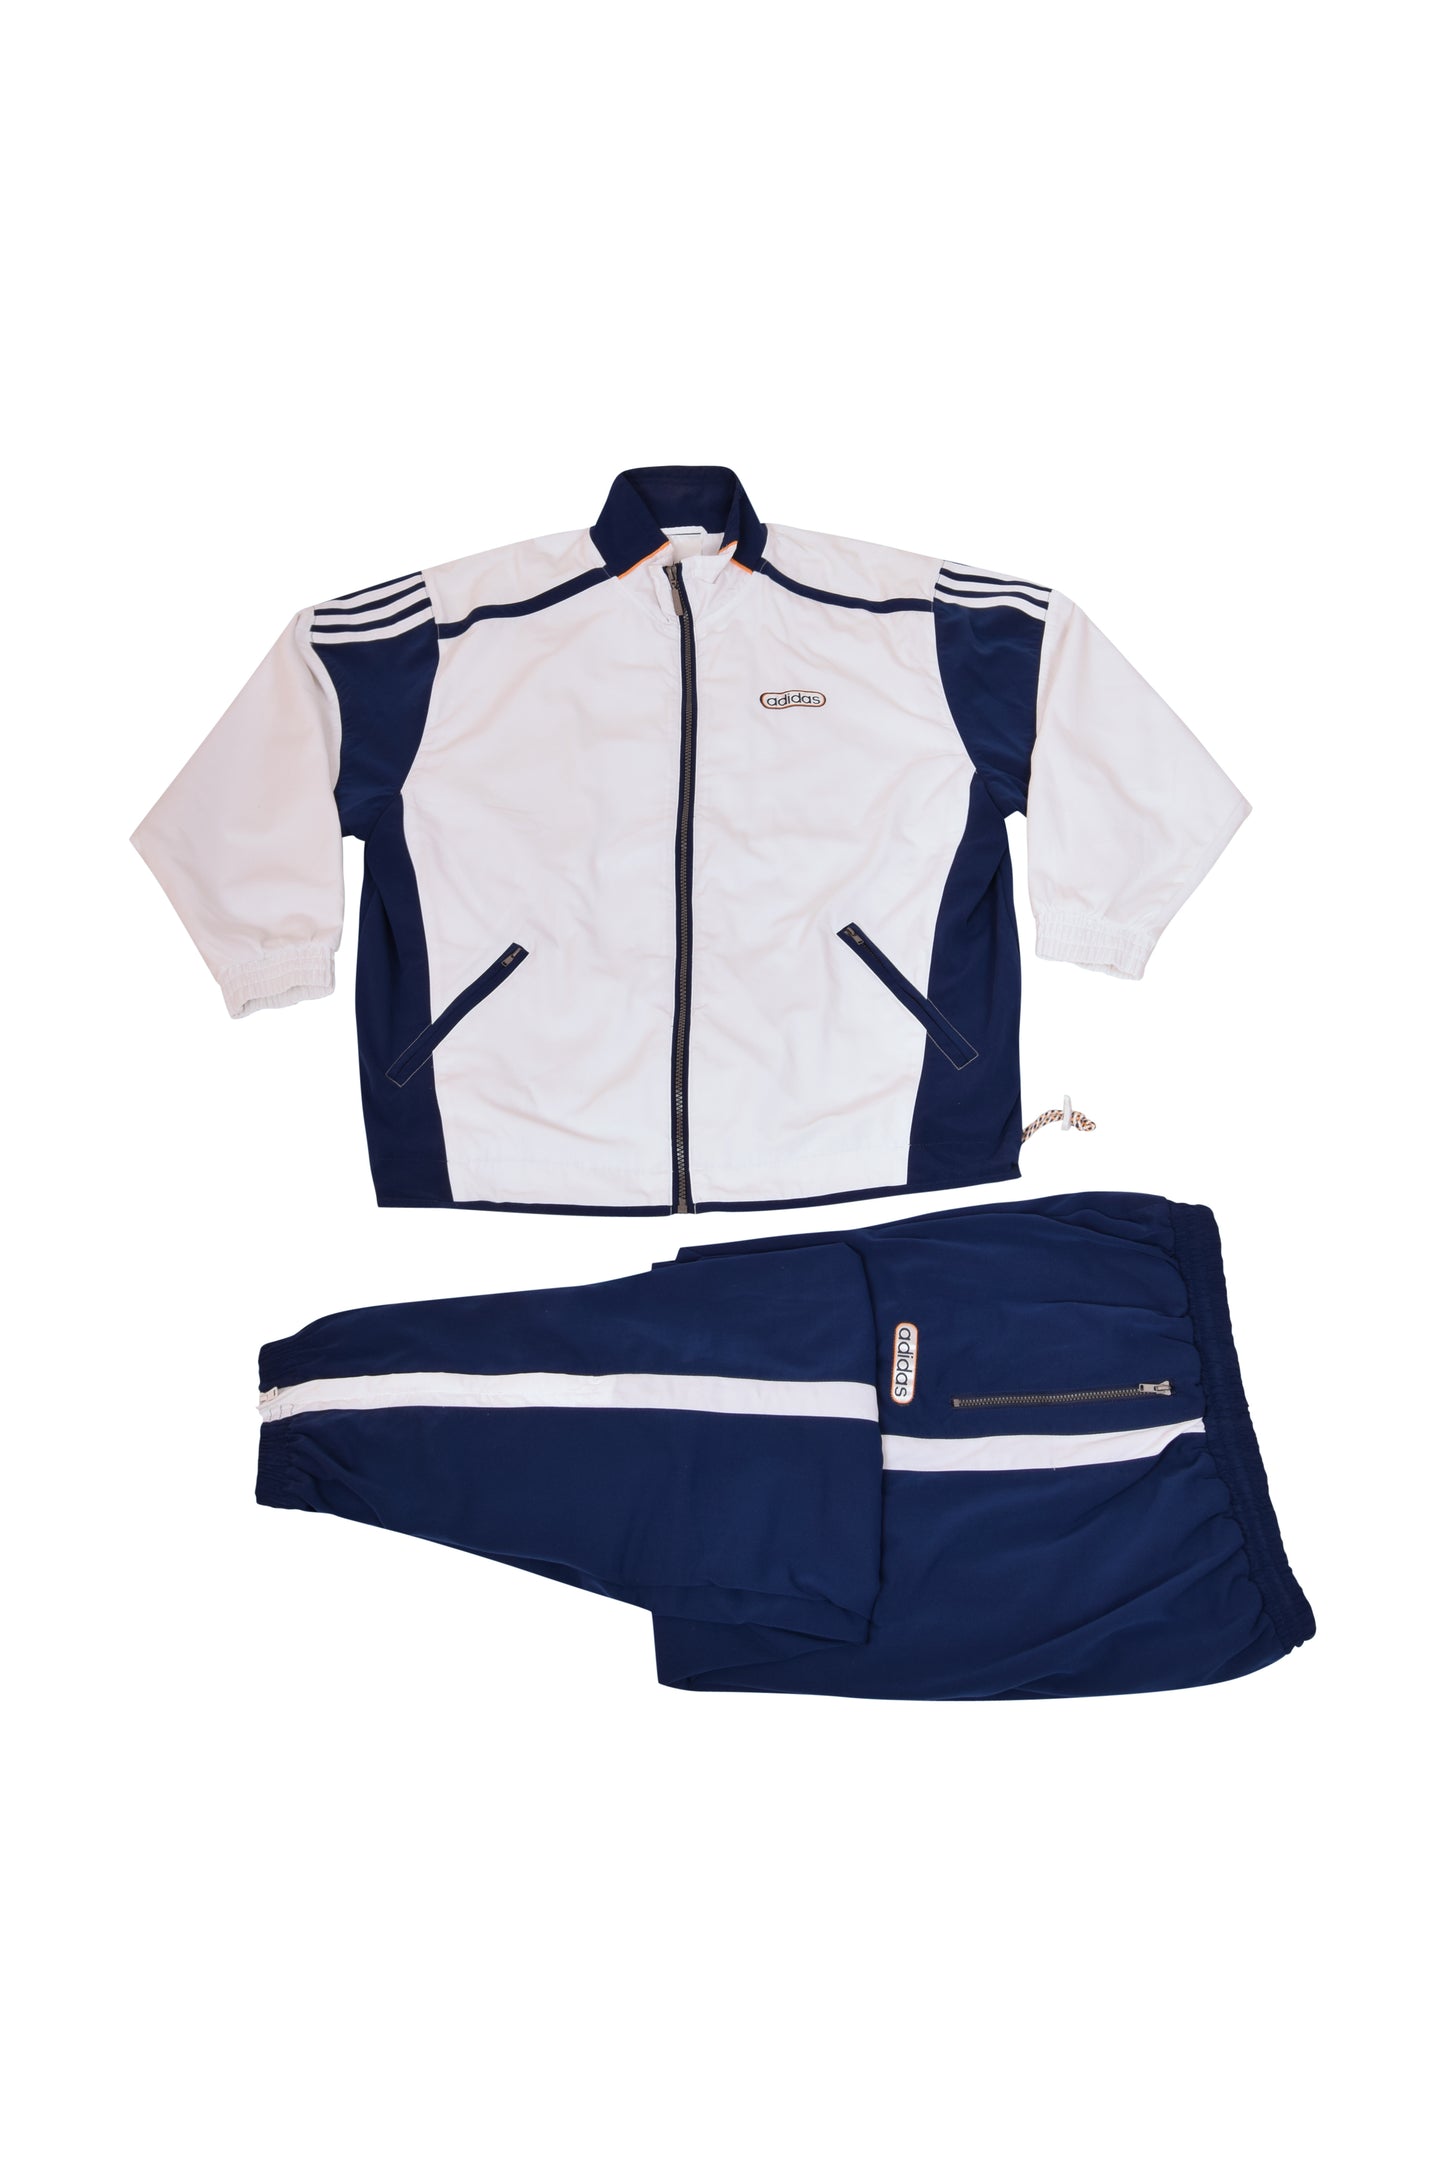 Vintage Adidas Tennis Track suit 90's White Blue